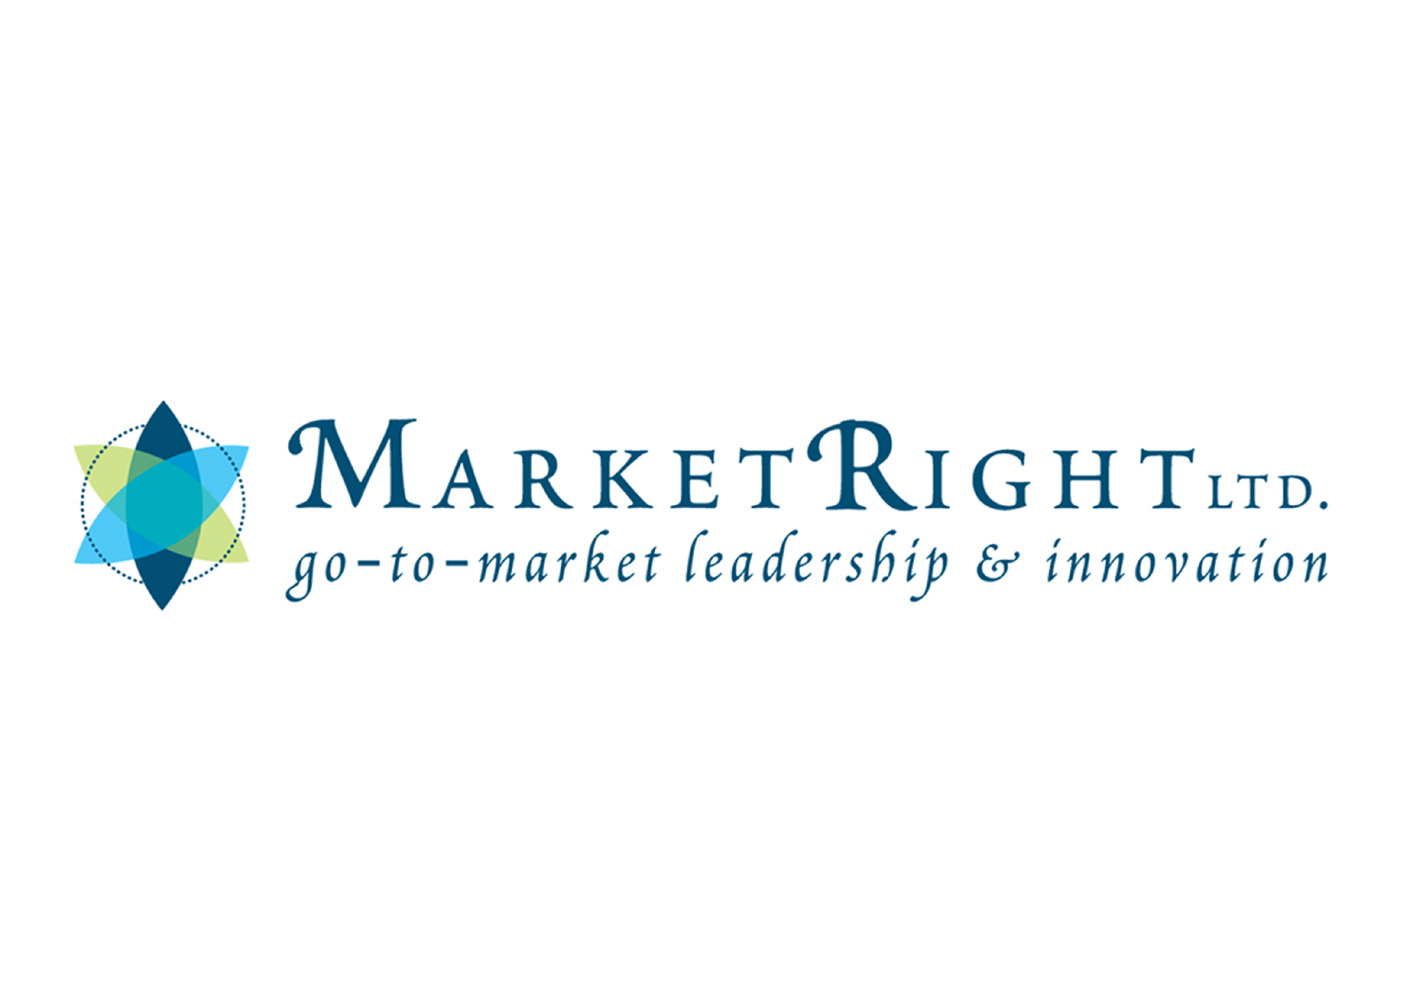 MarketRight Brand